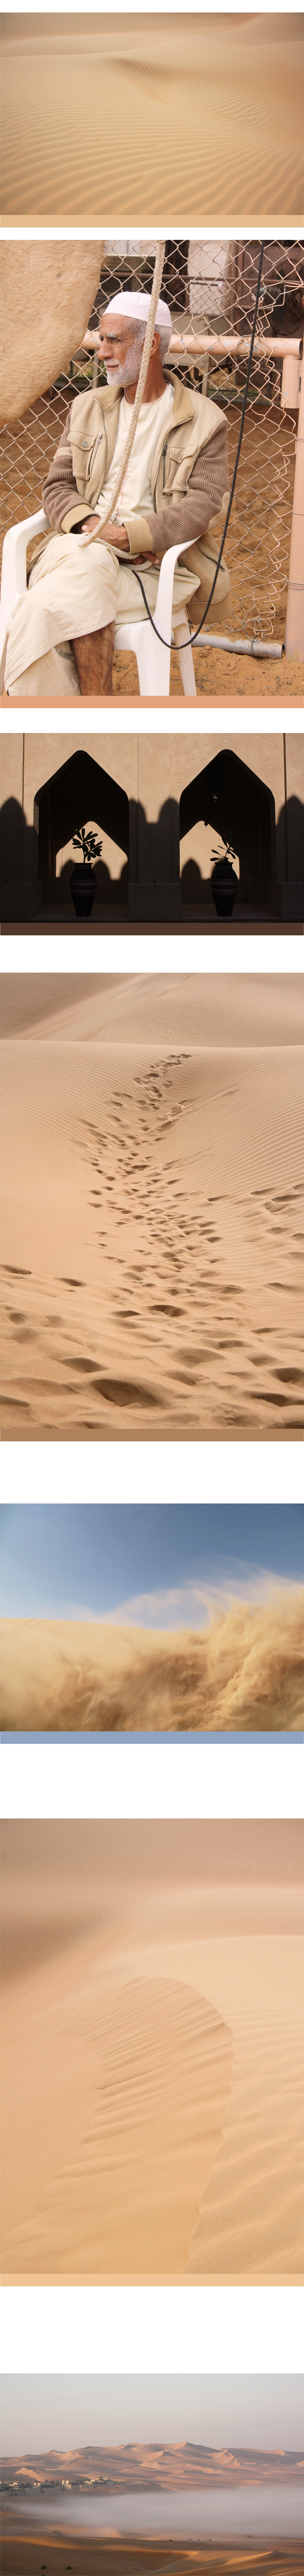 sahara Photography  Arab Saudi desert